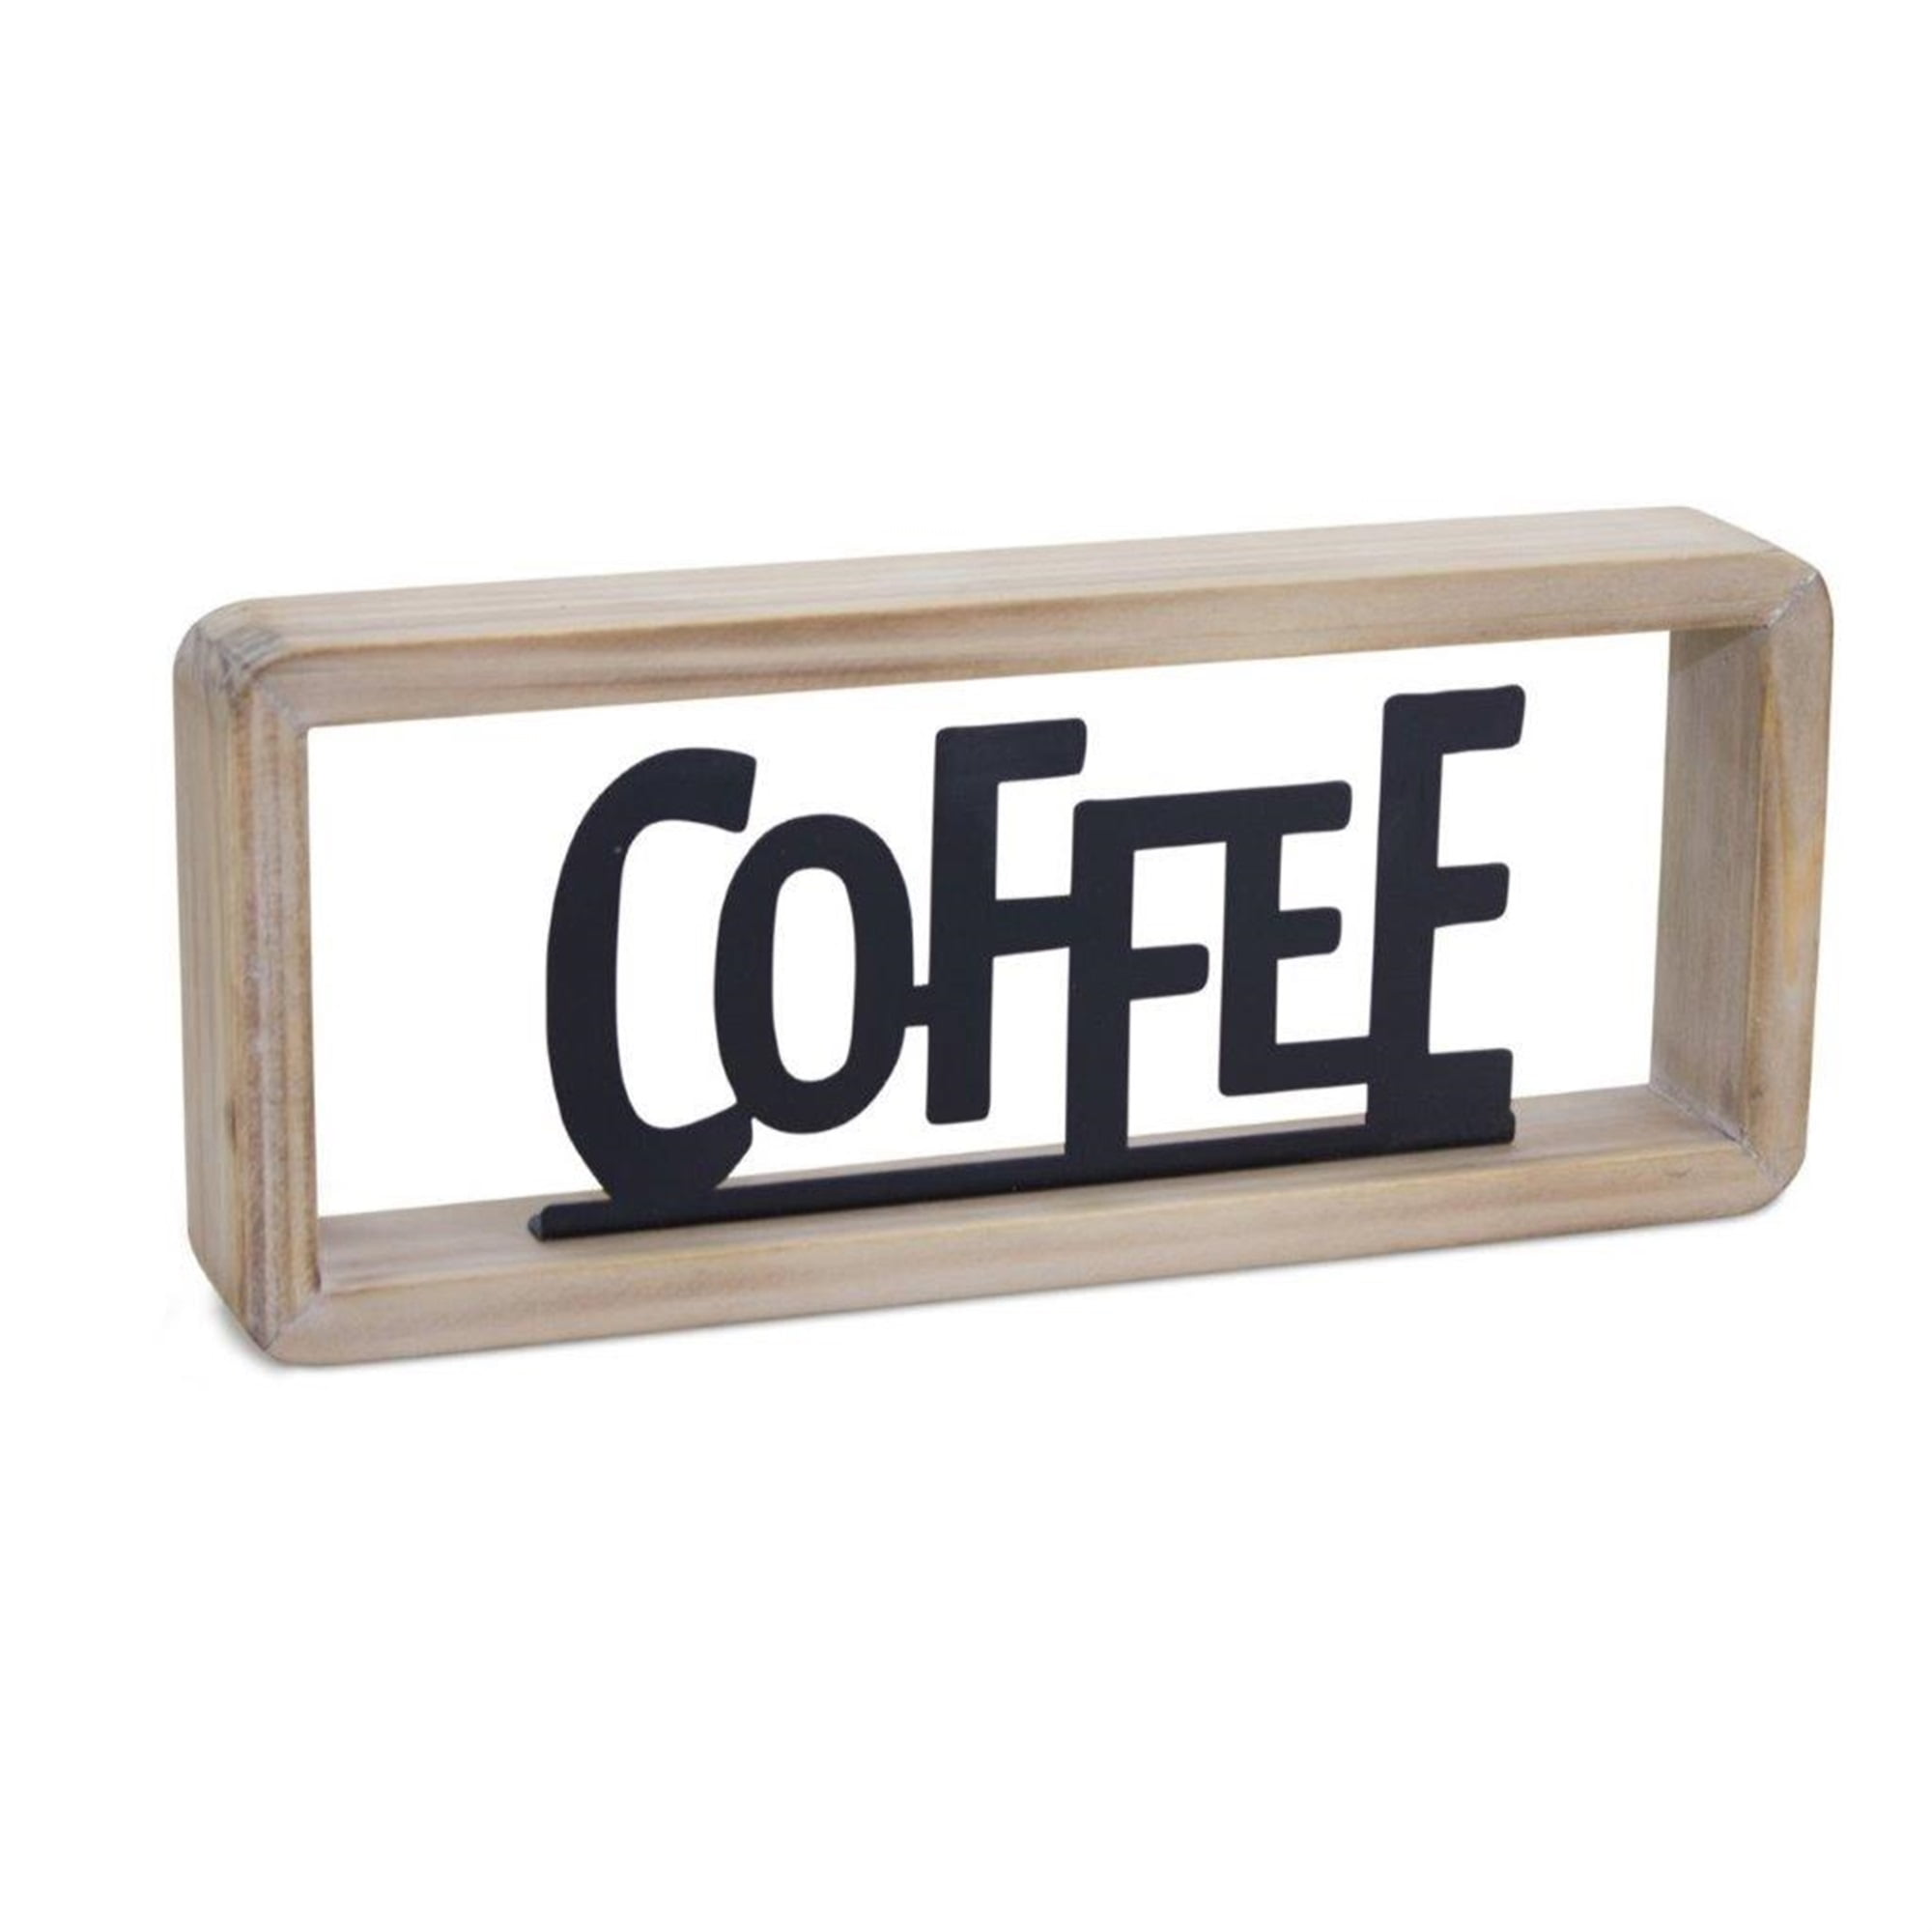 Coffee Sign 11.75"L x 5"H Wood/Metal